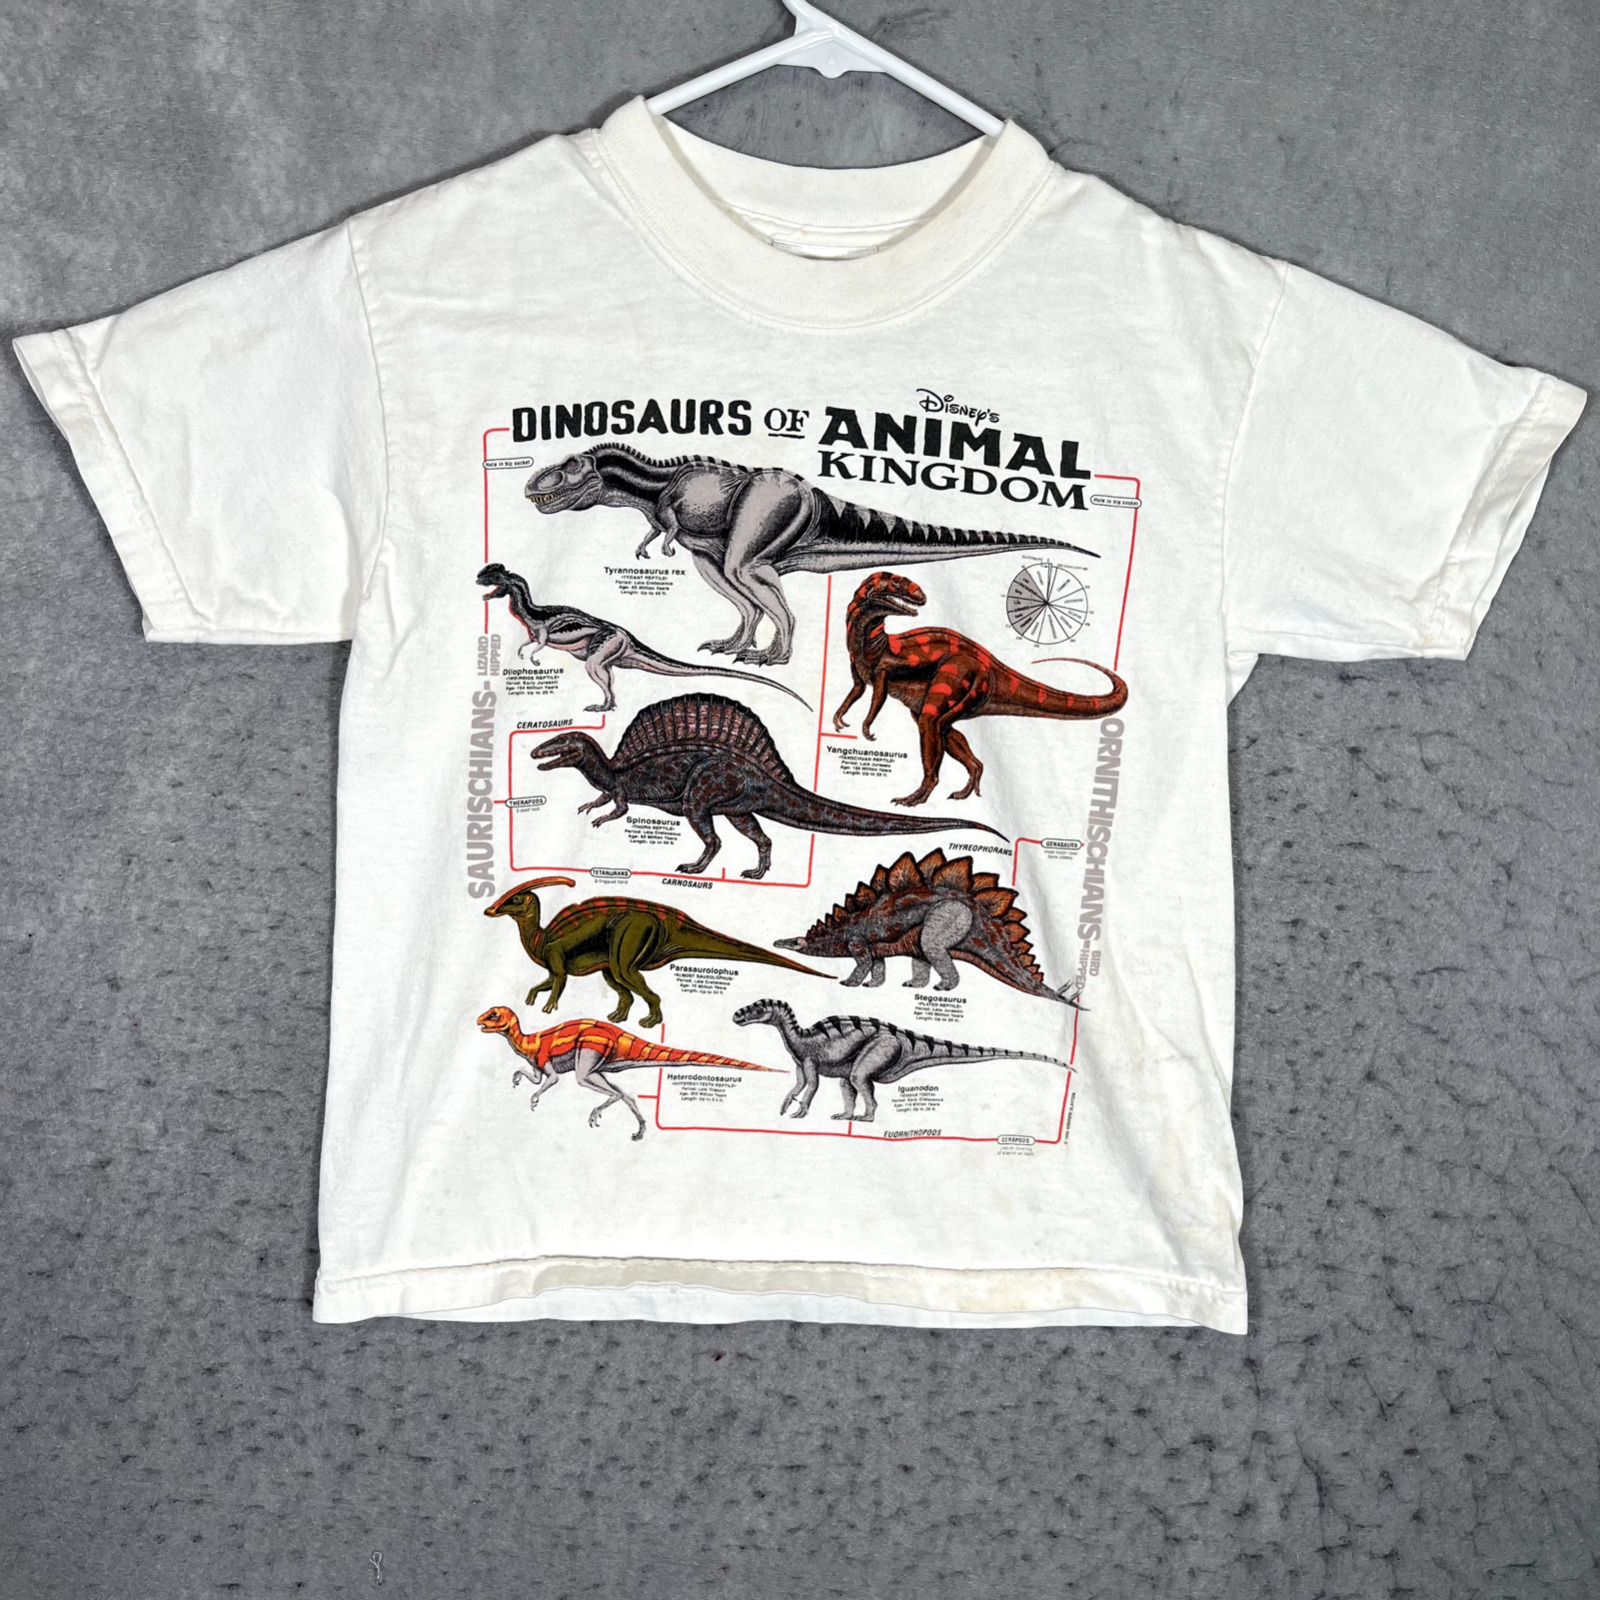 A1 Vintage Disney Animal Kingdom Dinosaurs Shirt Youth Medium White Cotton